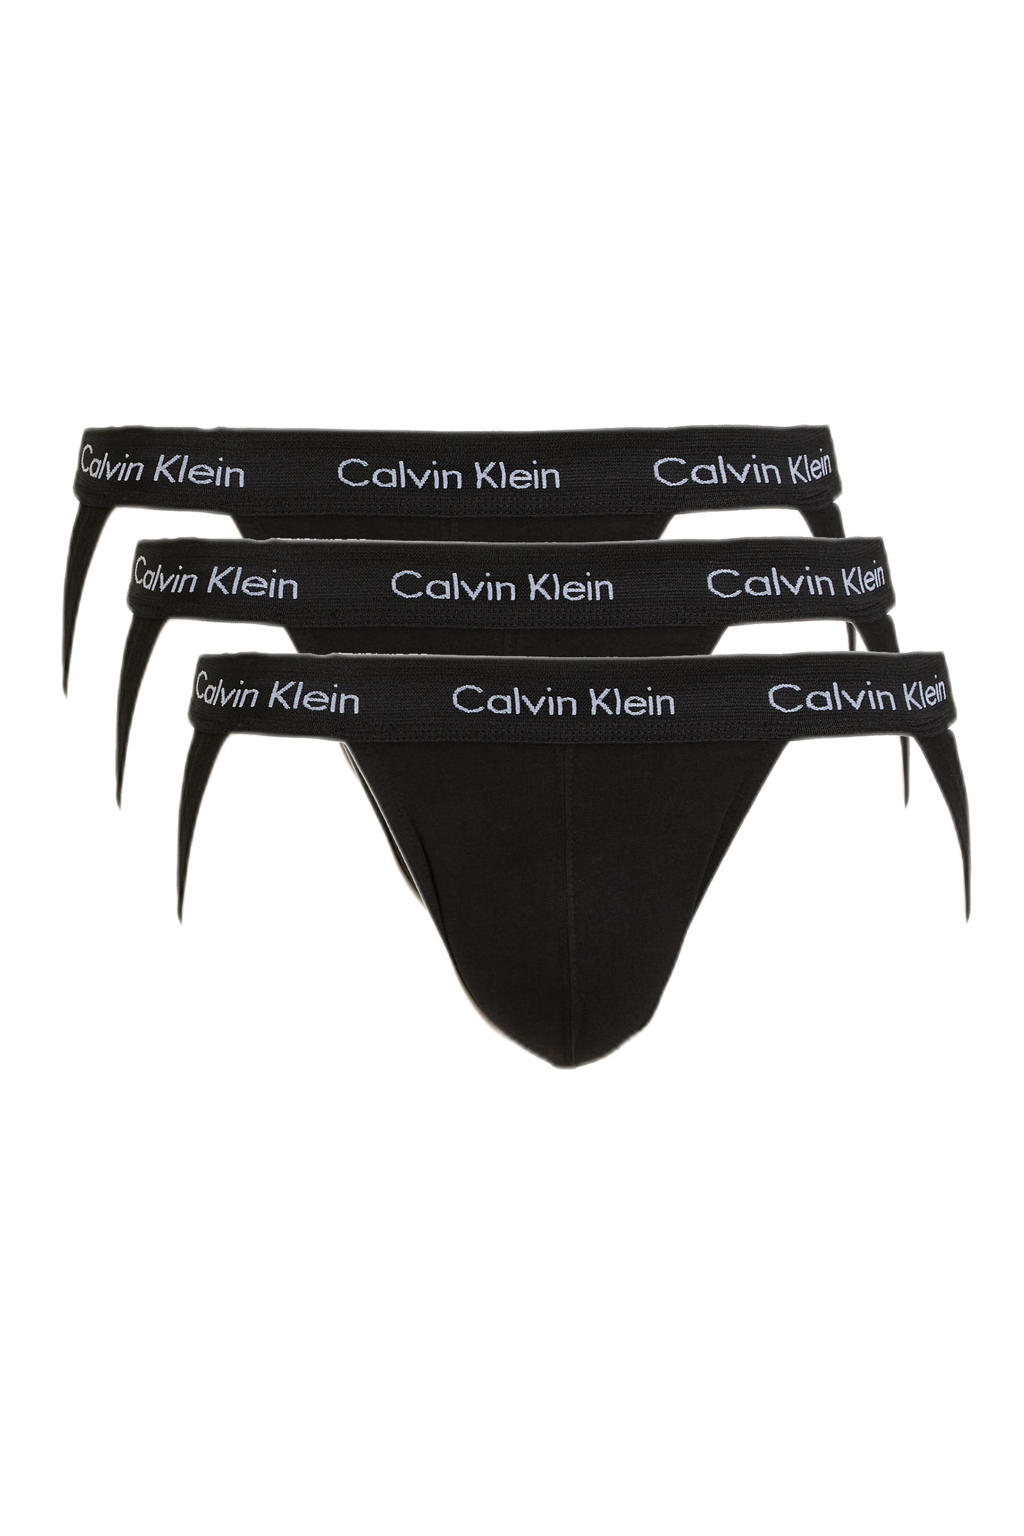 Calvin Klein jockstrap (set van 3)